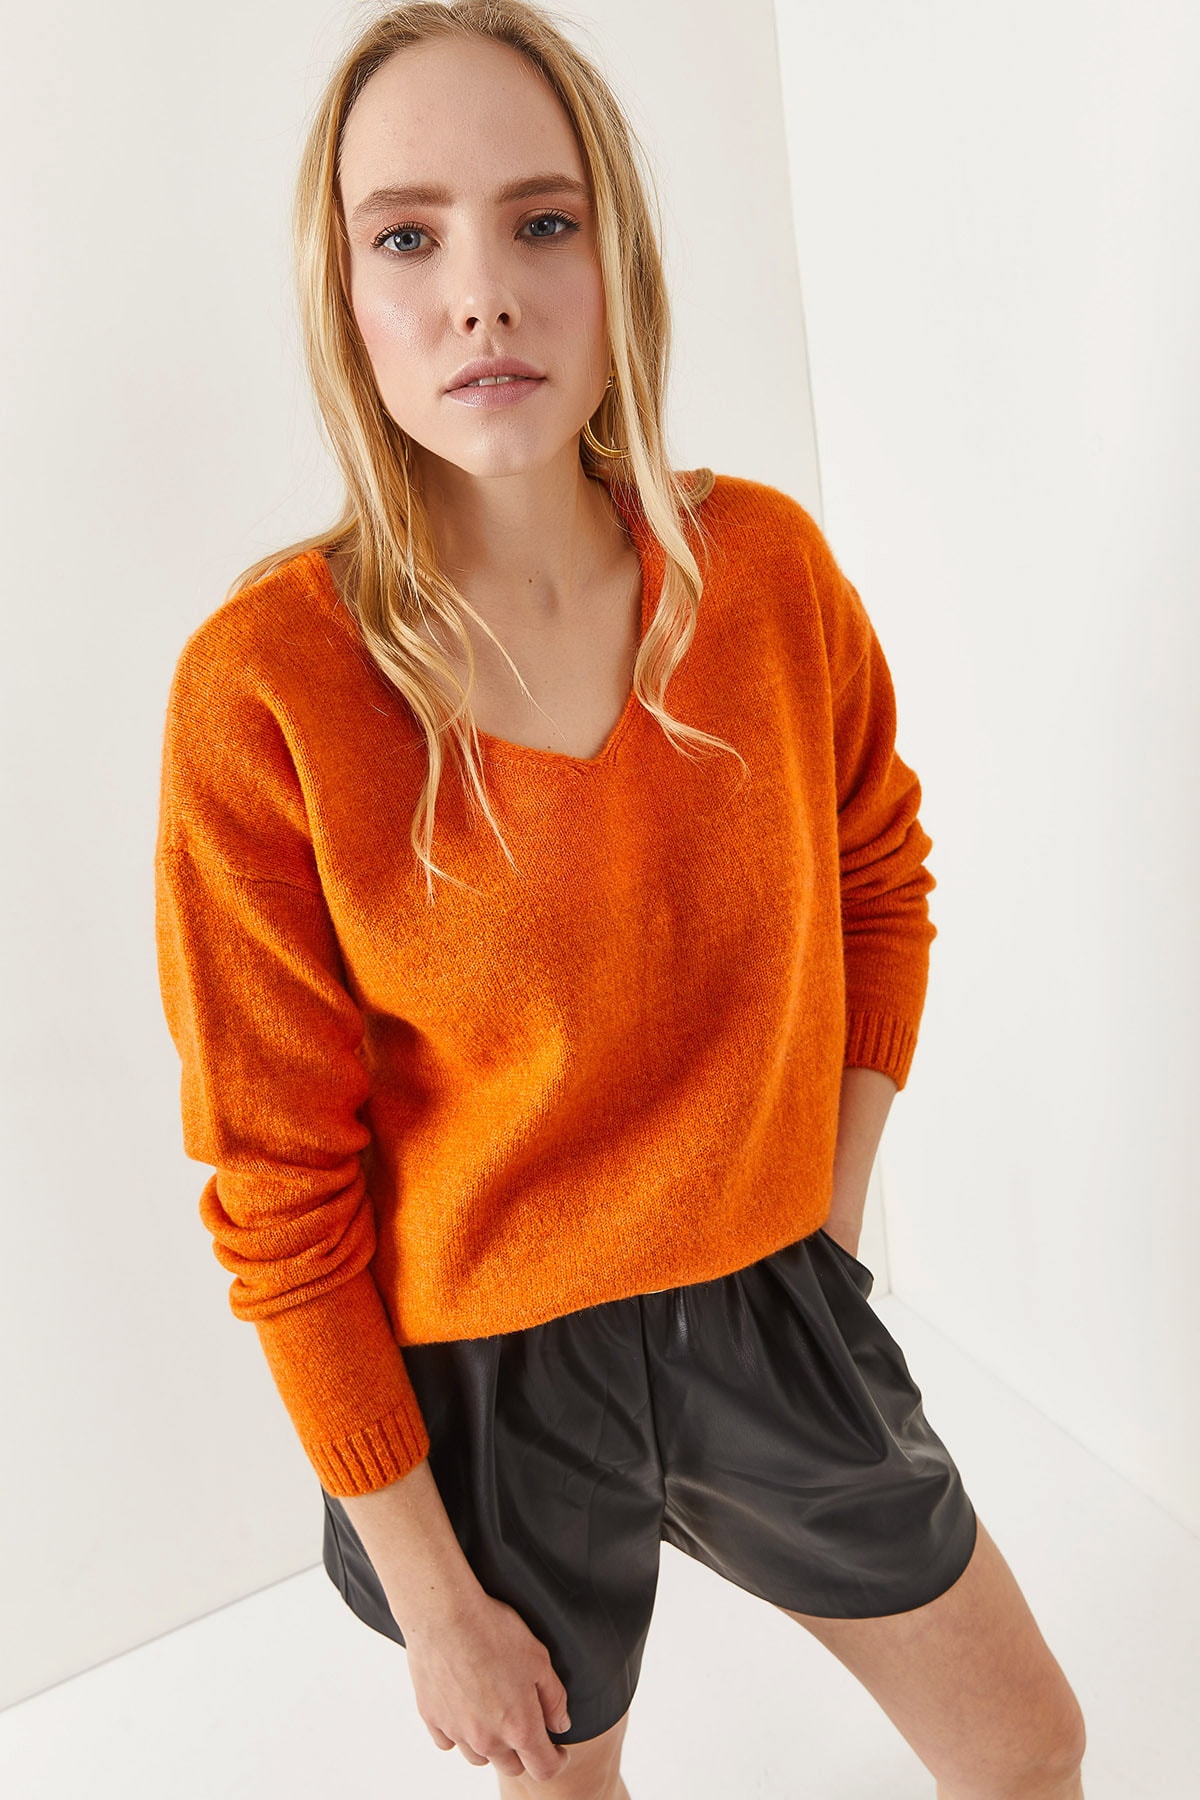 Olalook Women's Orange V-Neck Soft Textured Knitwear Sweater